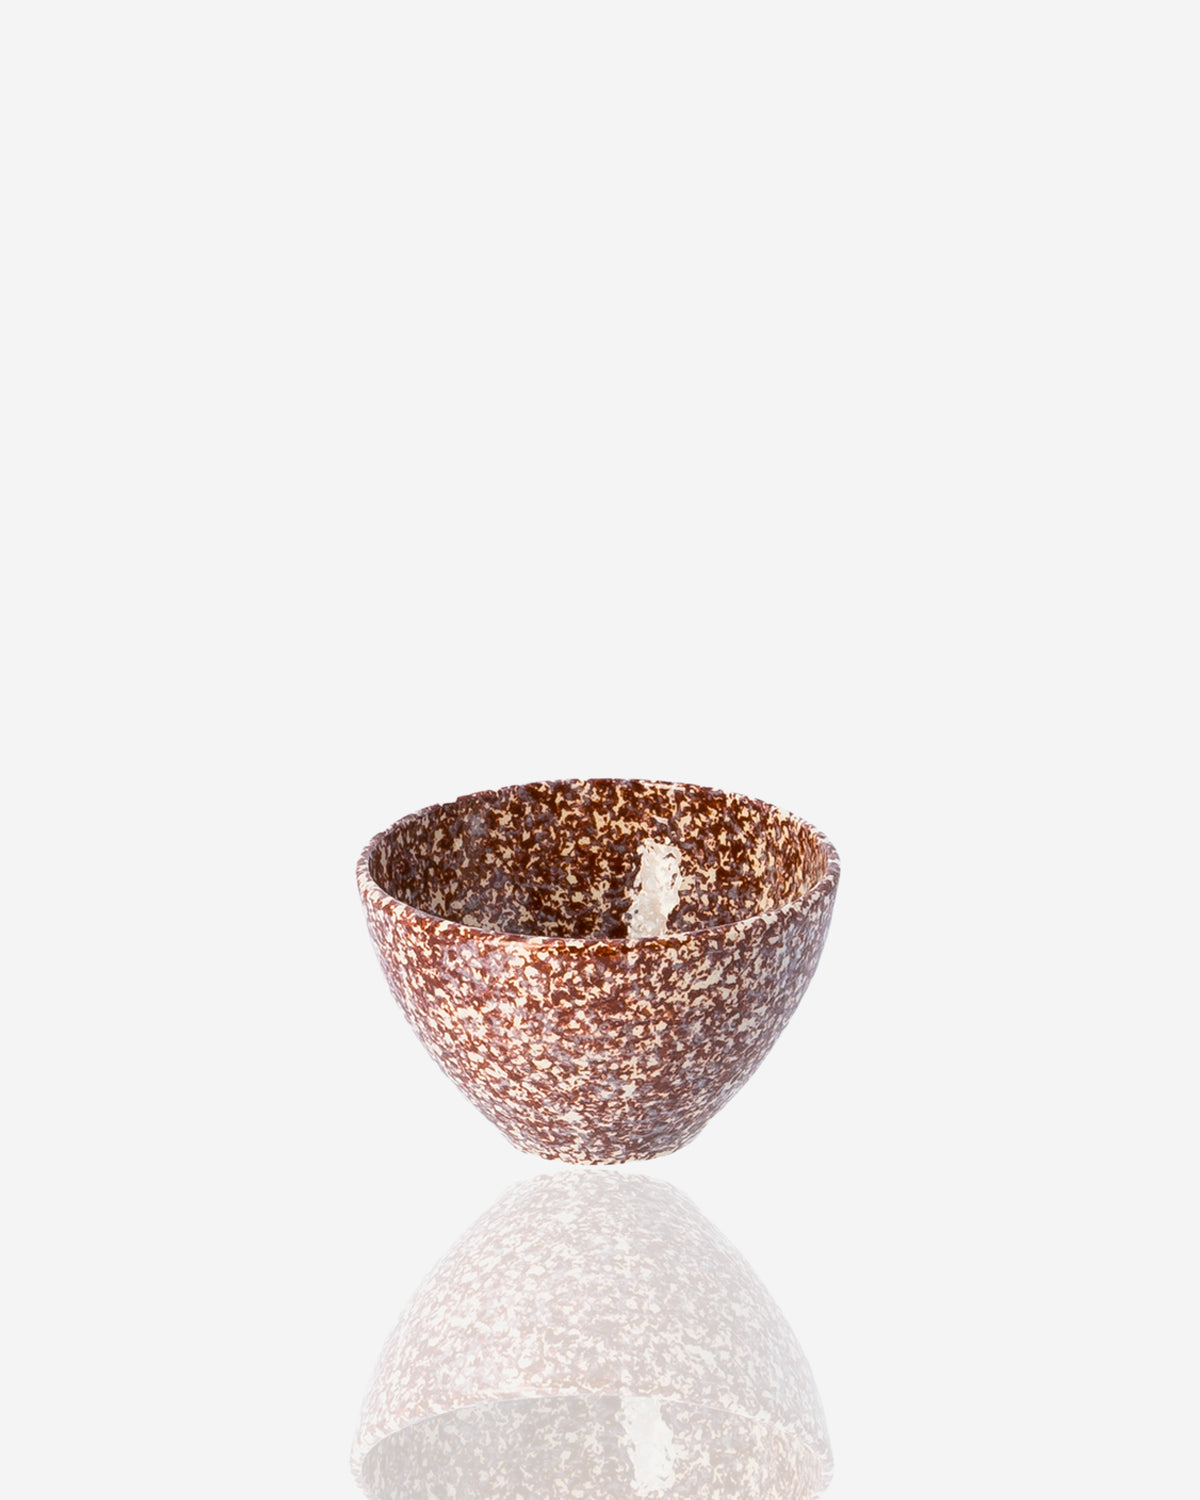 Granite Conic Bowl